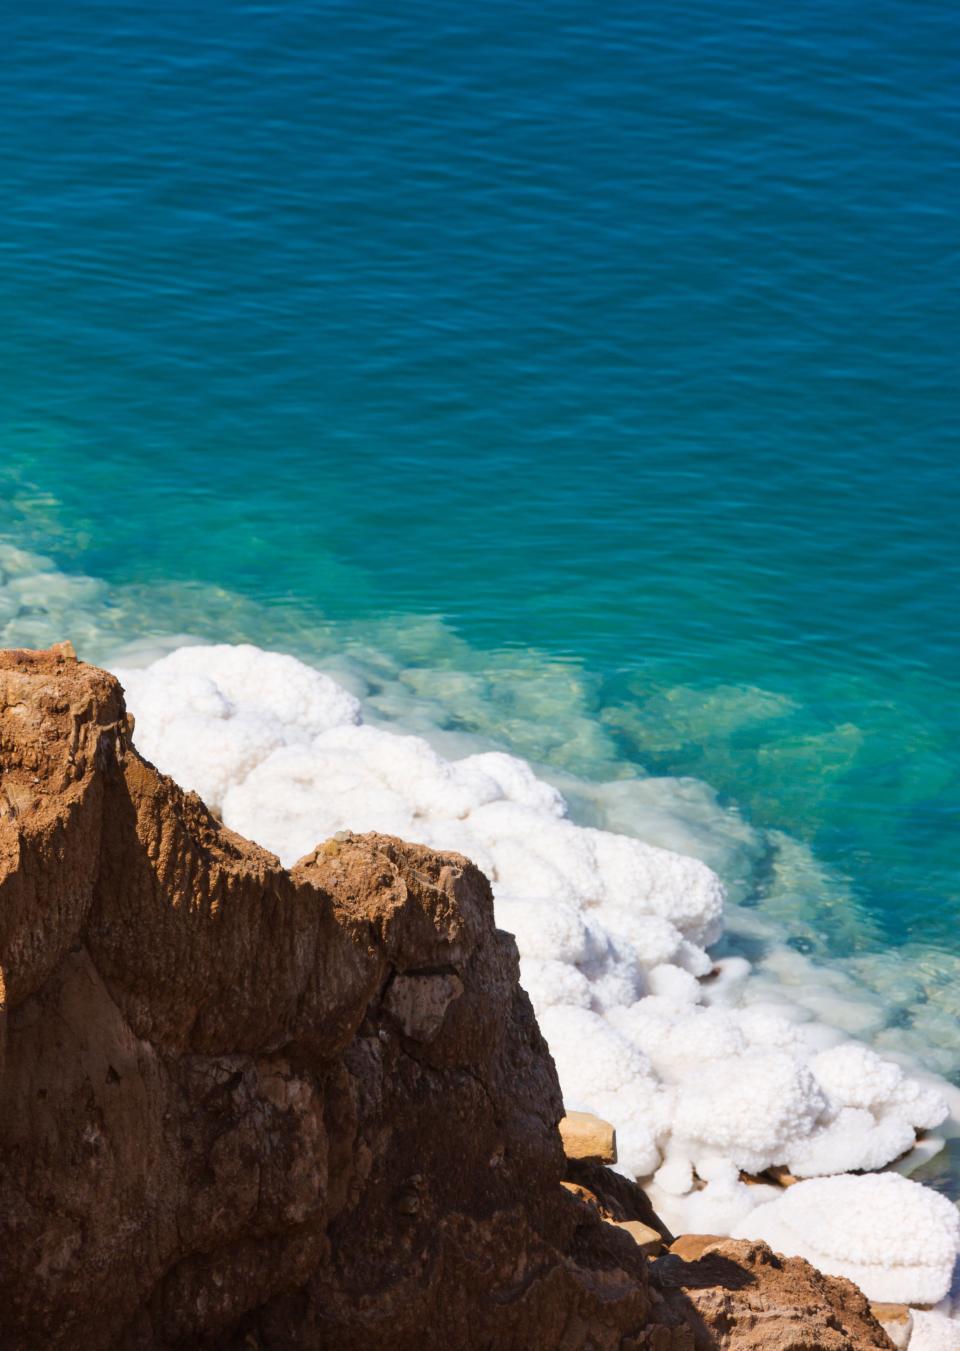 Deposits of salt form over gypsum in the cliffs of the Dead Sea in Jordan.